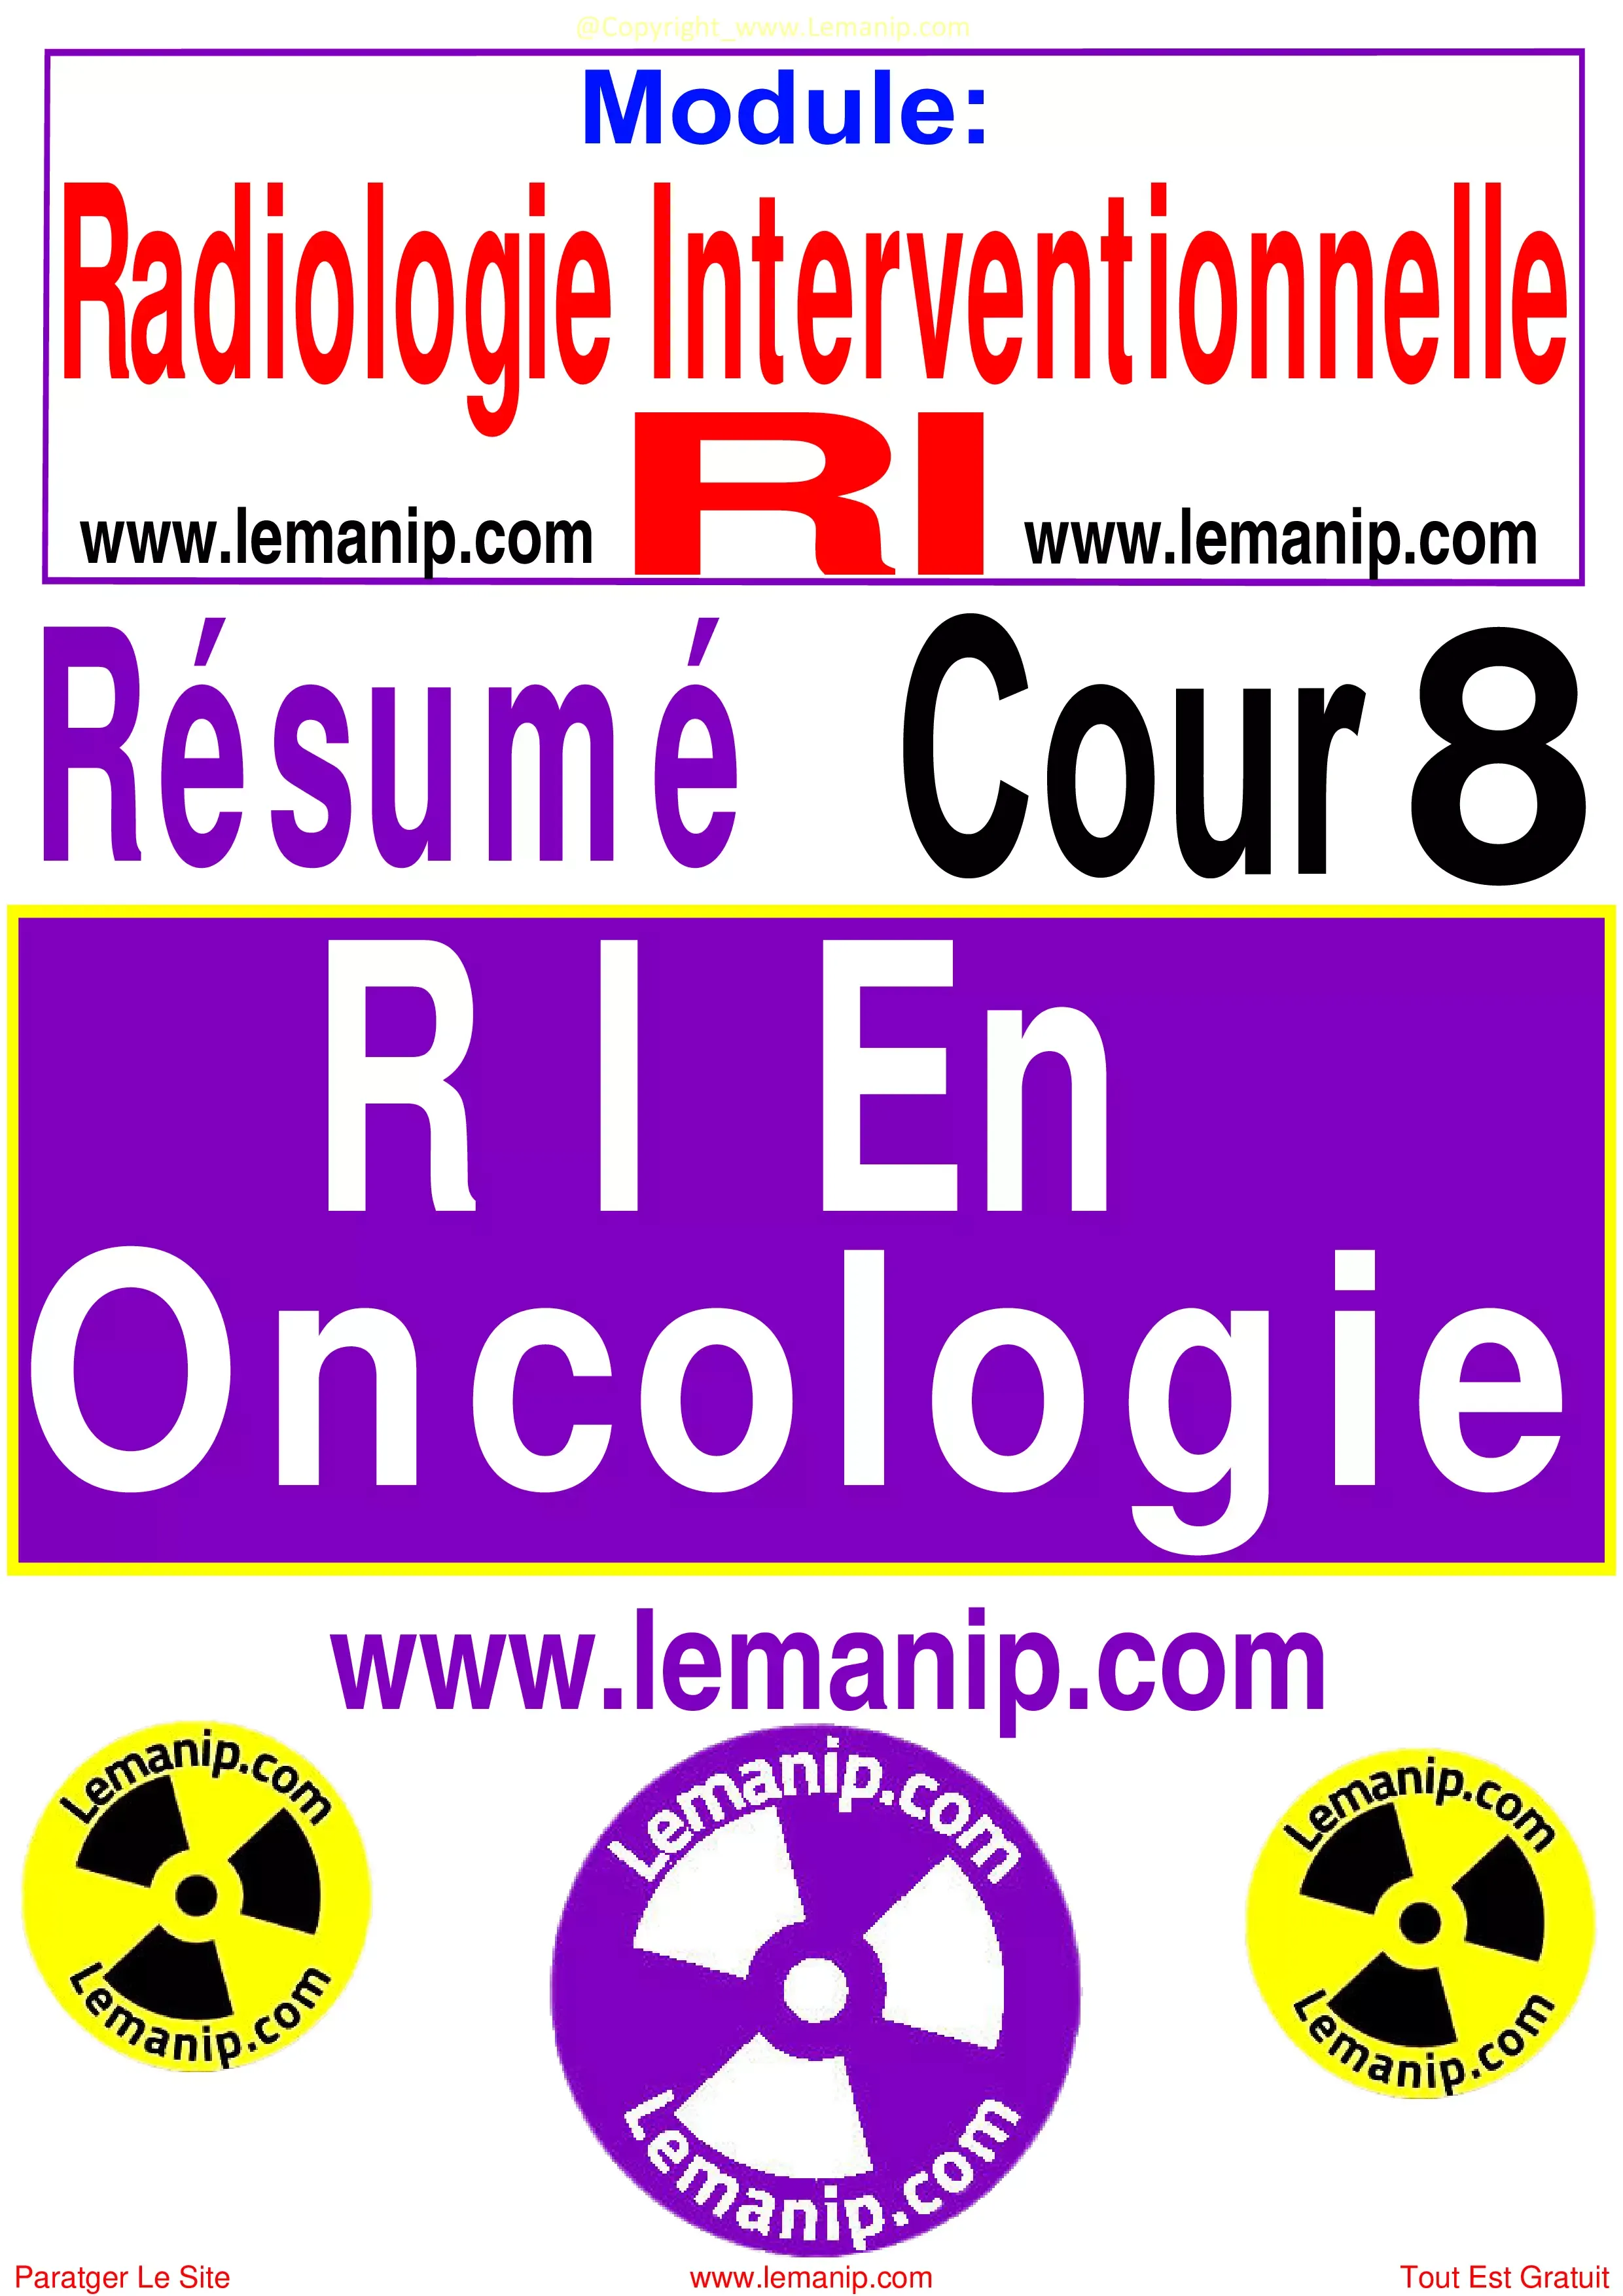 Cour 8 Du Module Radiologie Interventionnelle